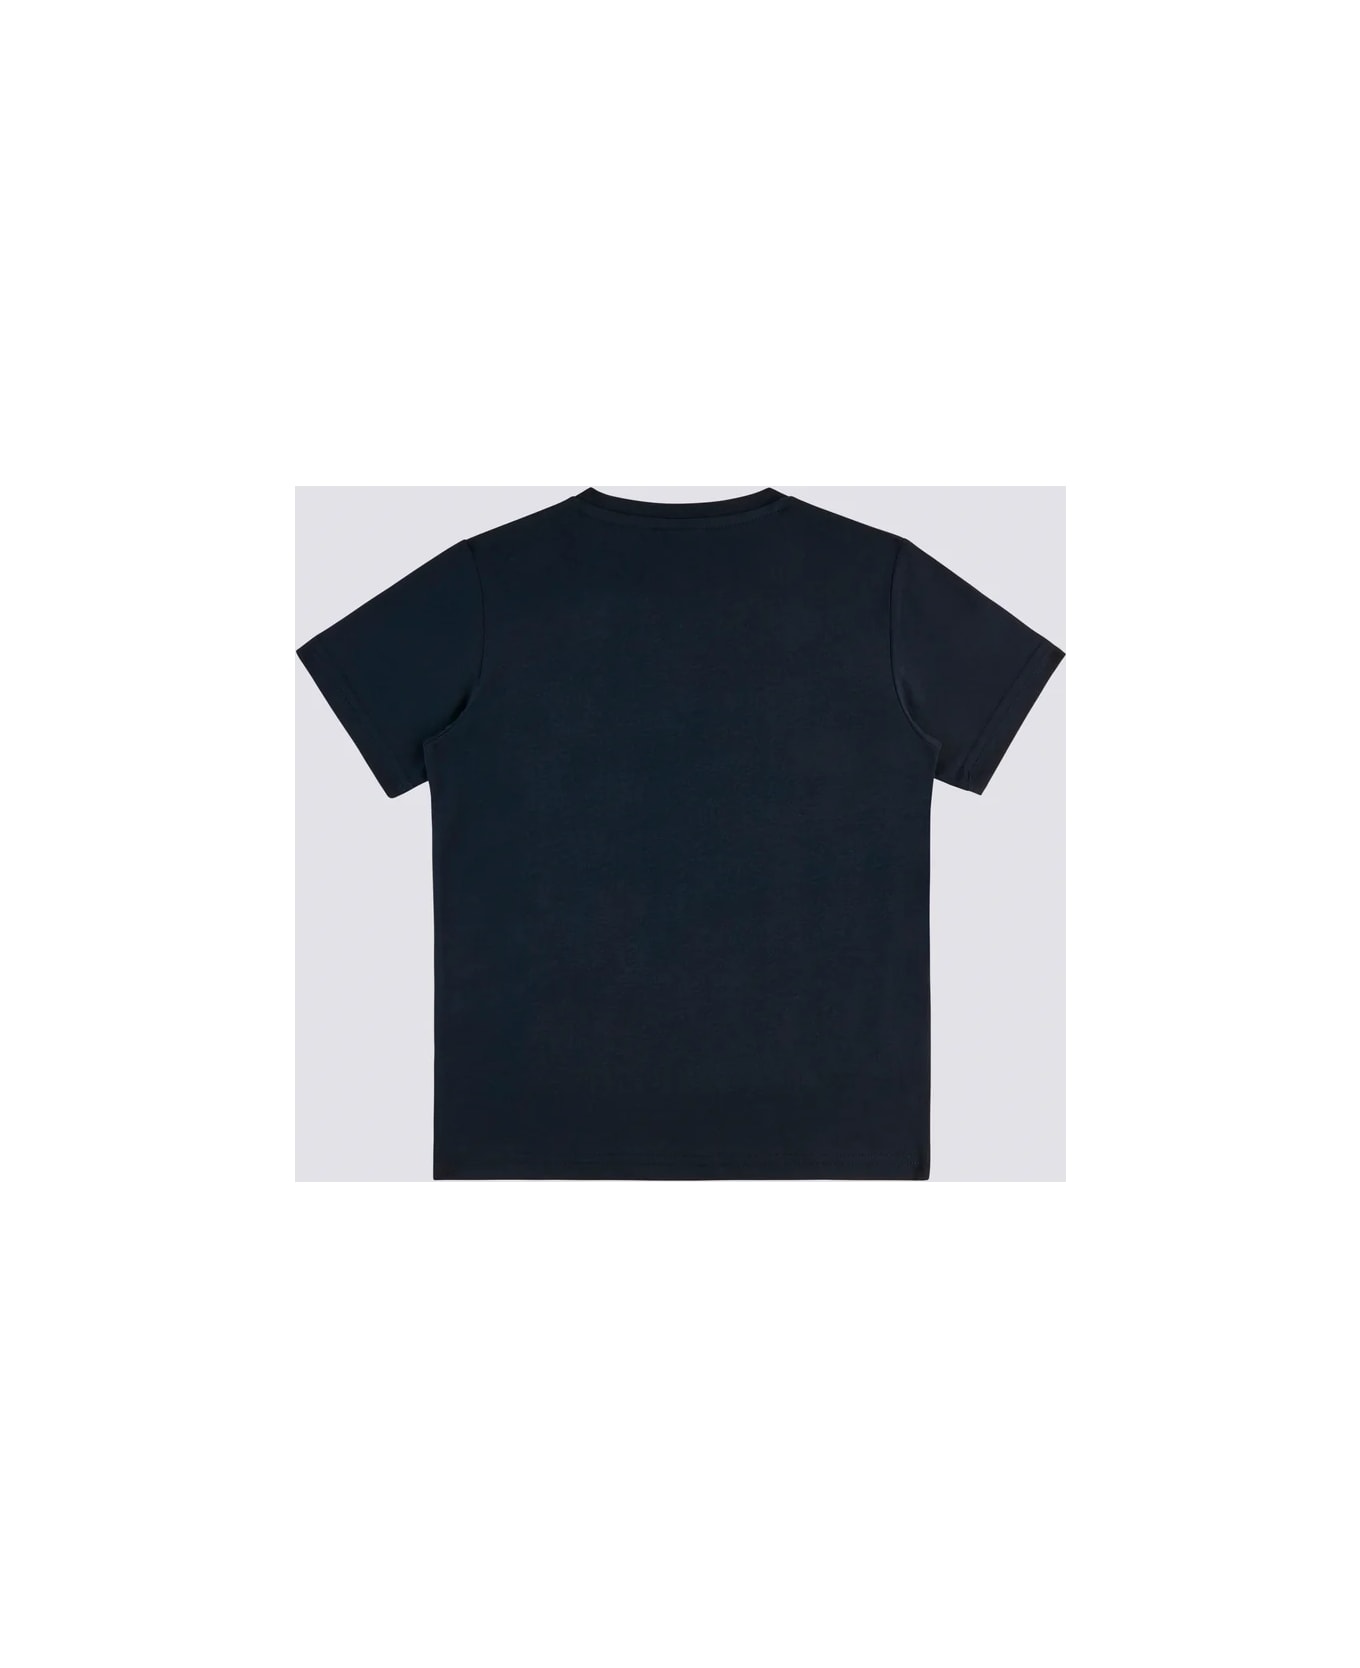 Sundek T-shirt Con Stampa - Blue